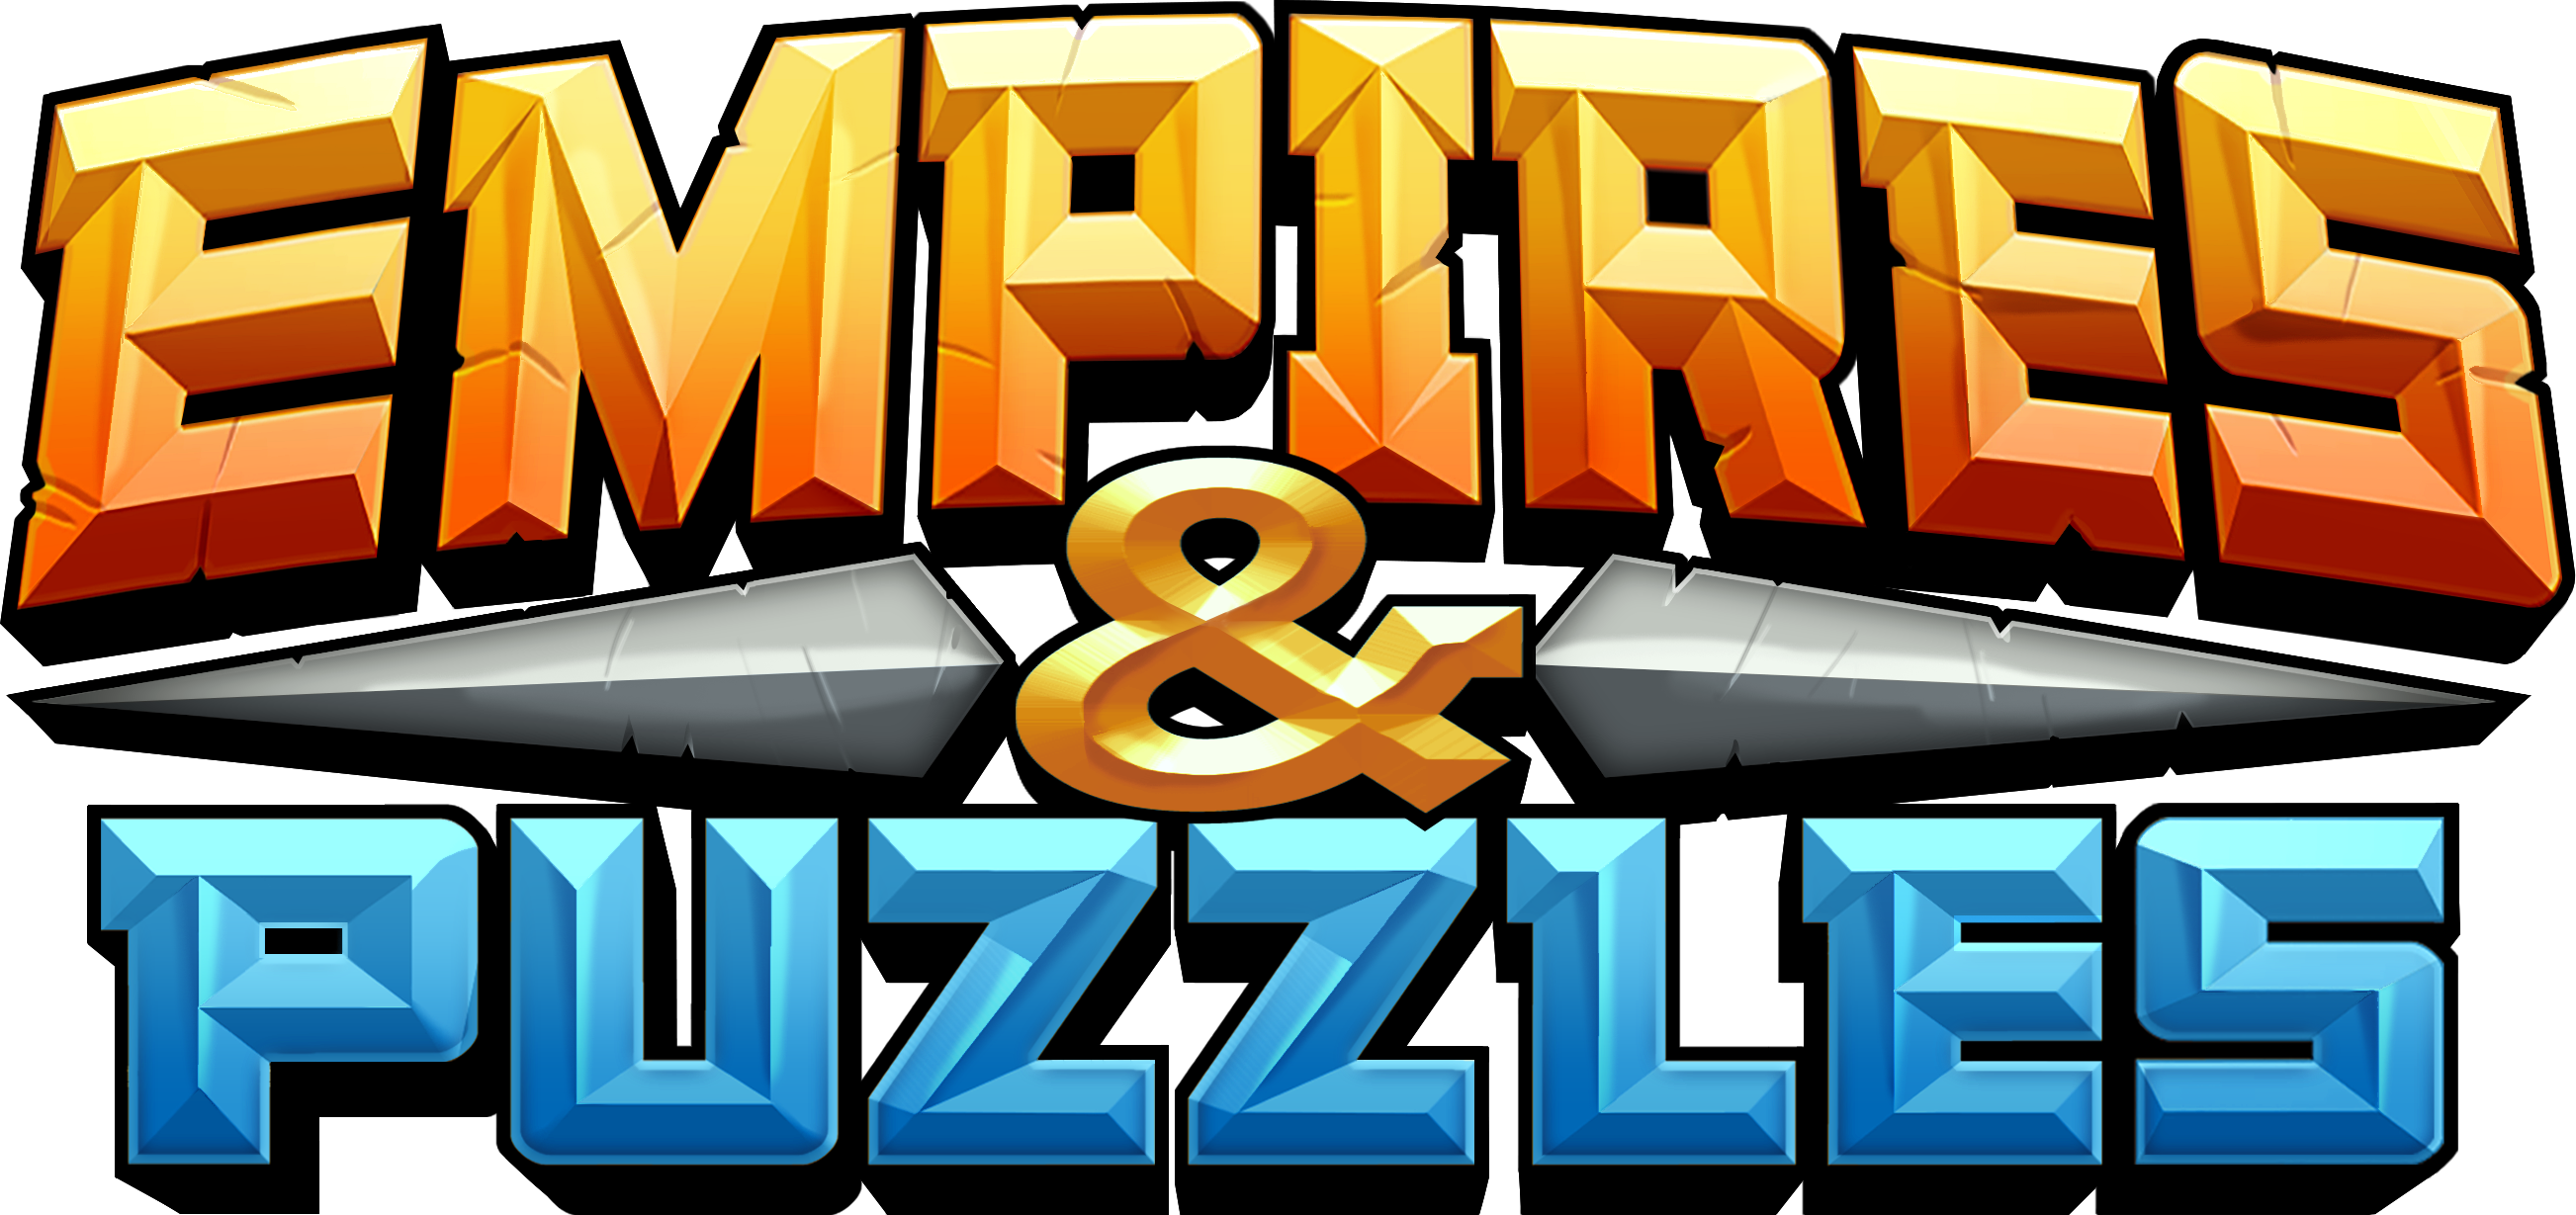 Empires & Puzzles logo.png